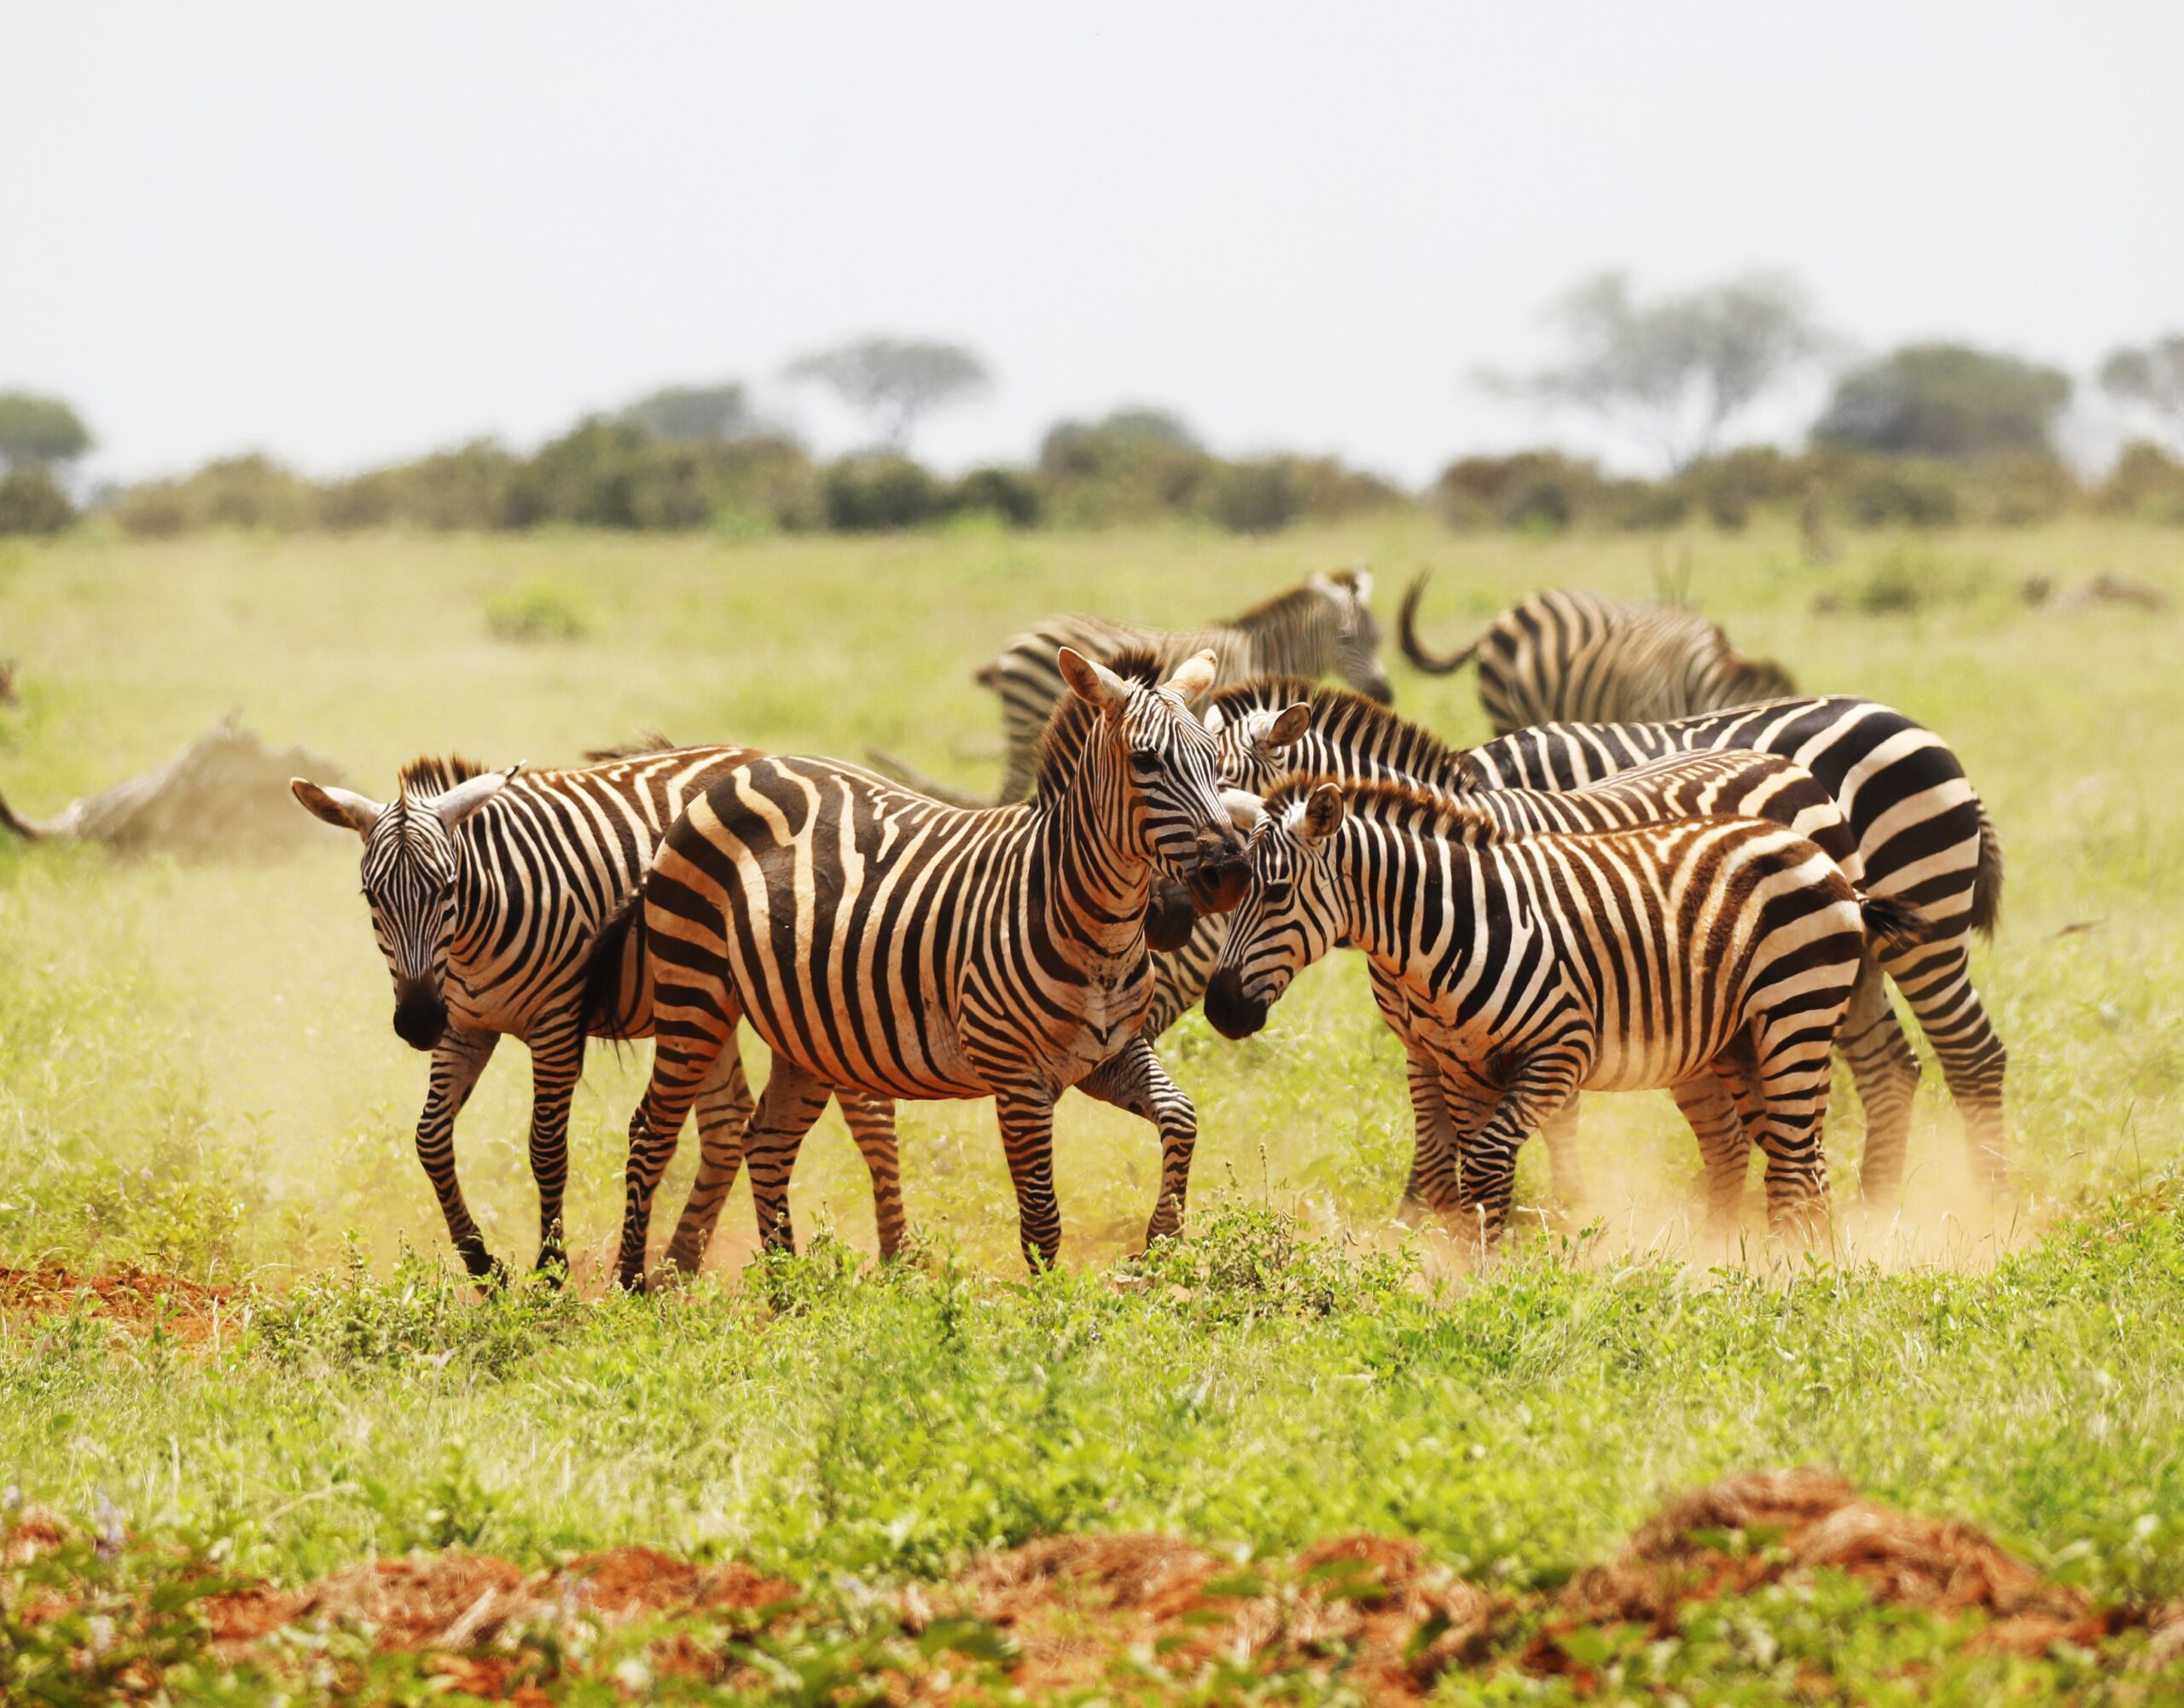 A group of Zebras grazing in Tsavo East National park, Kenya, Africa